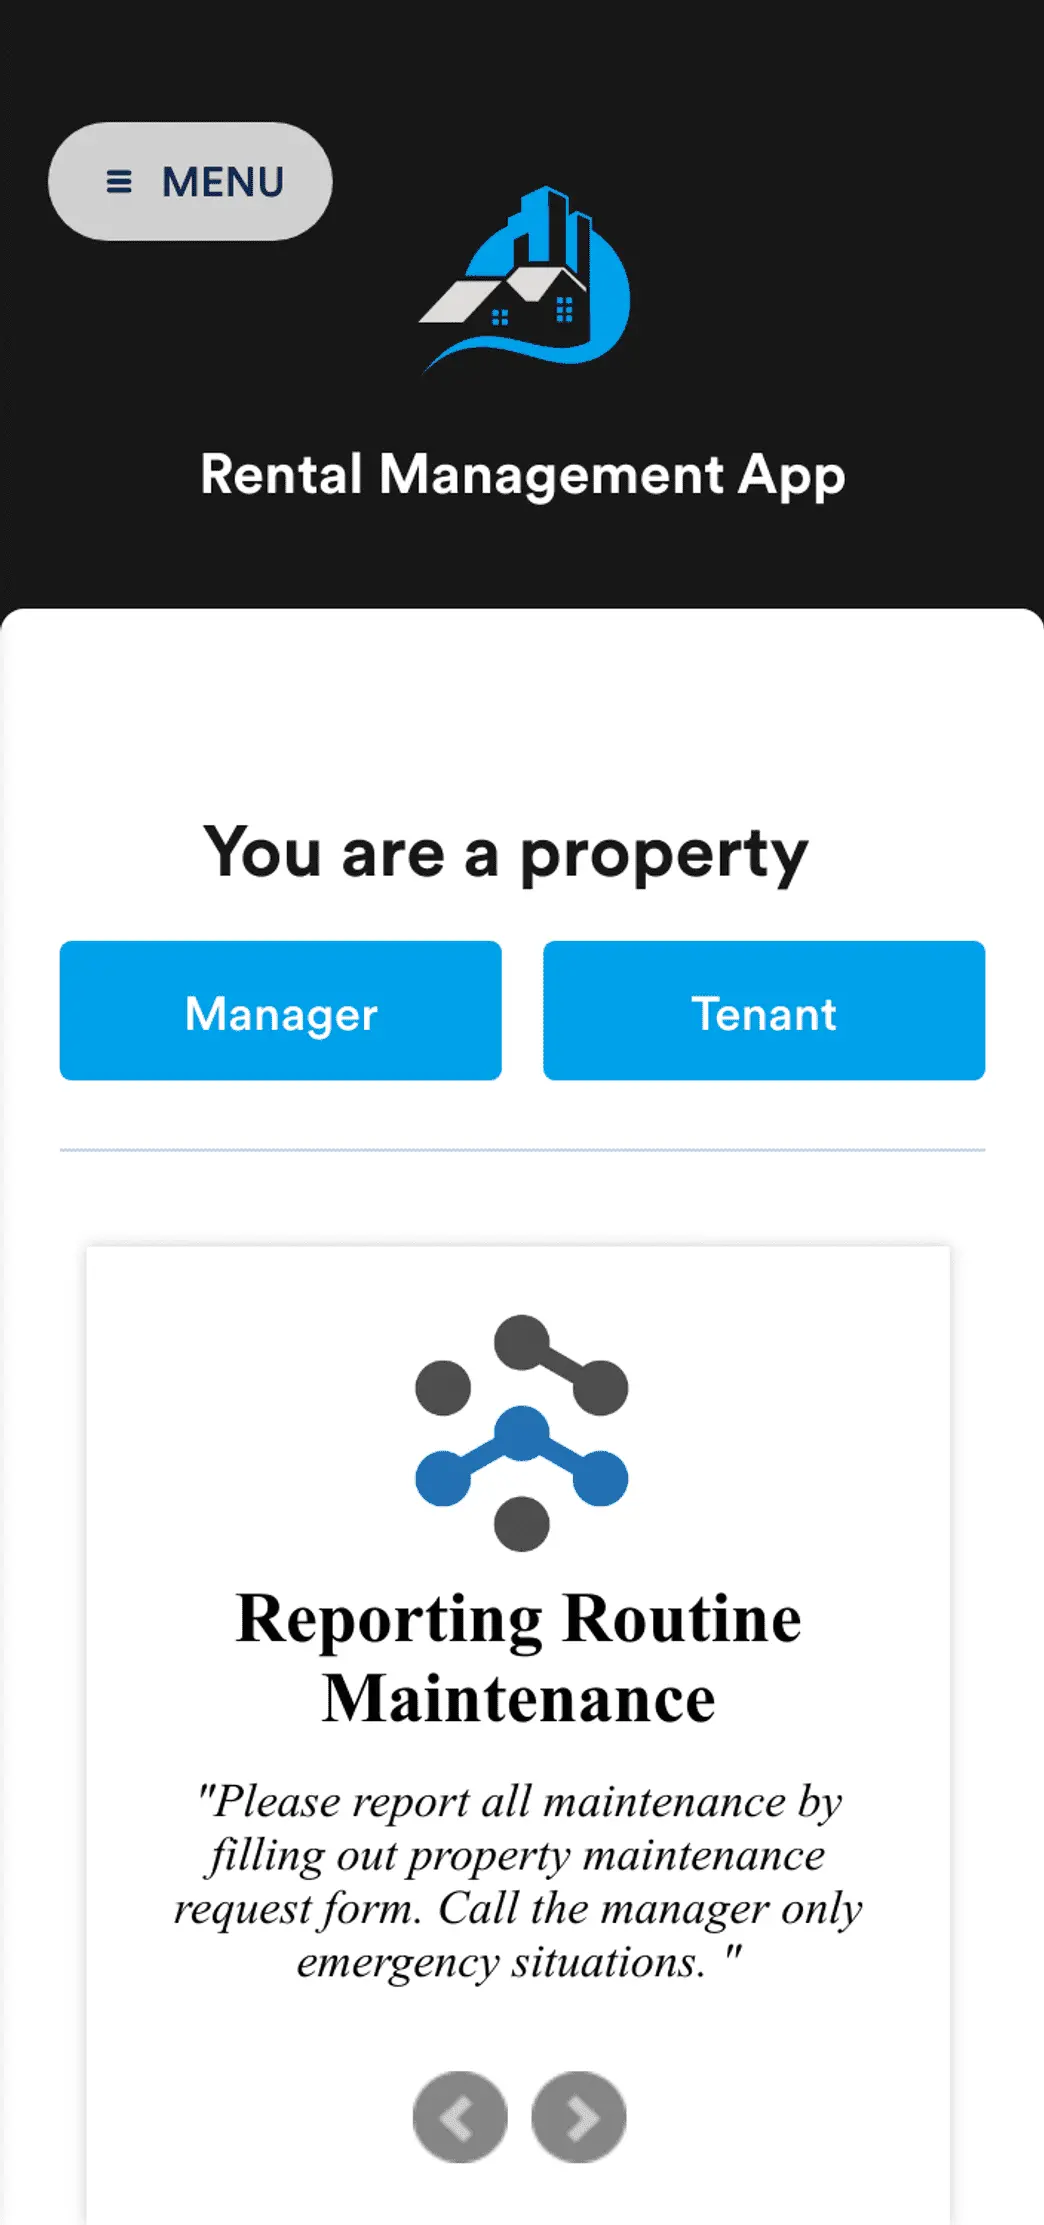 Rental Management App